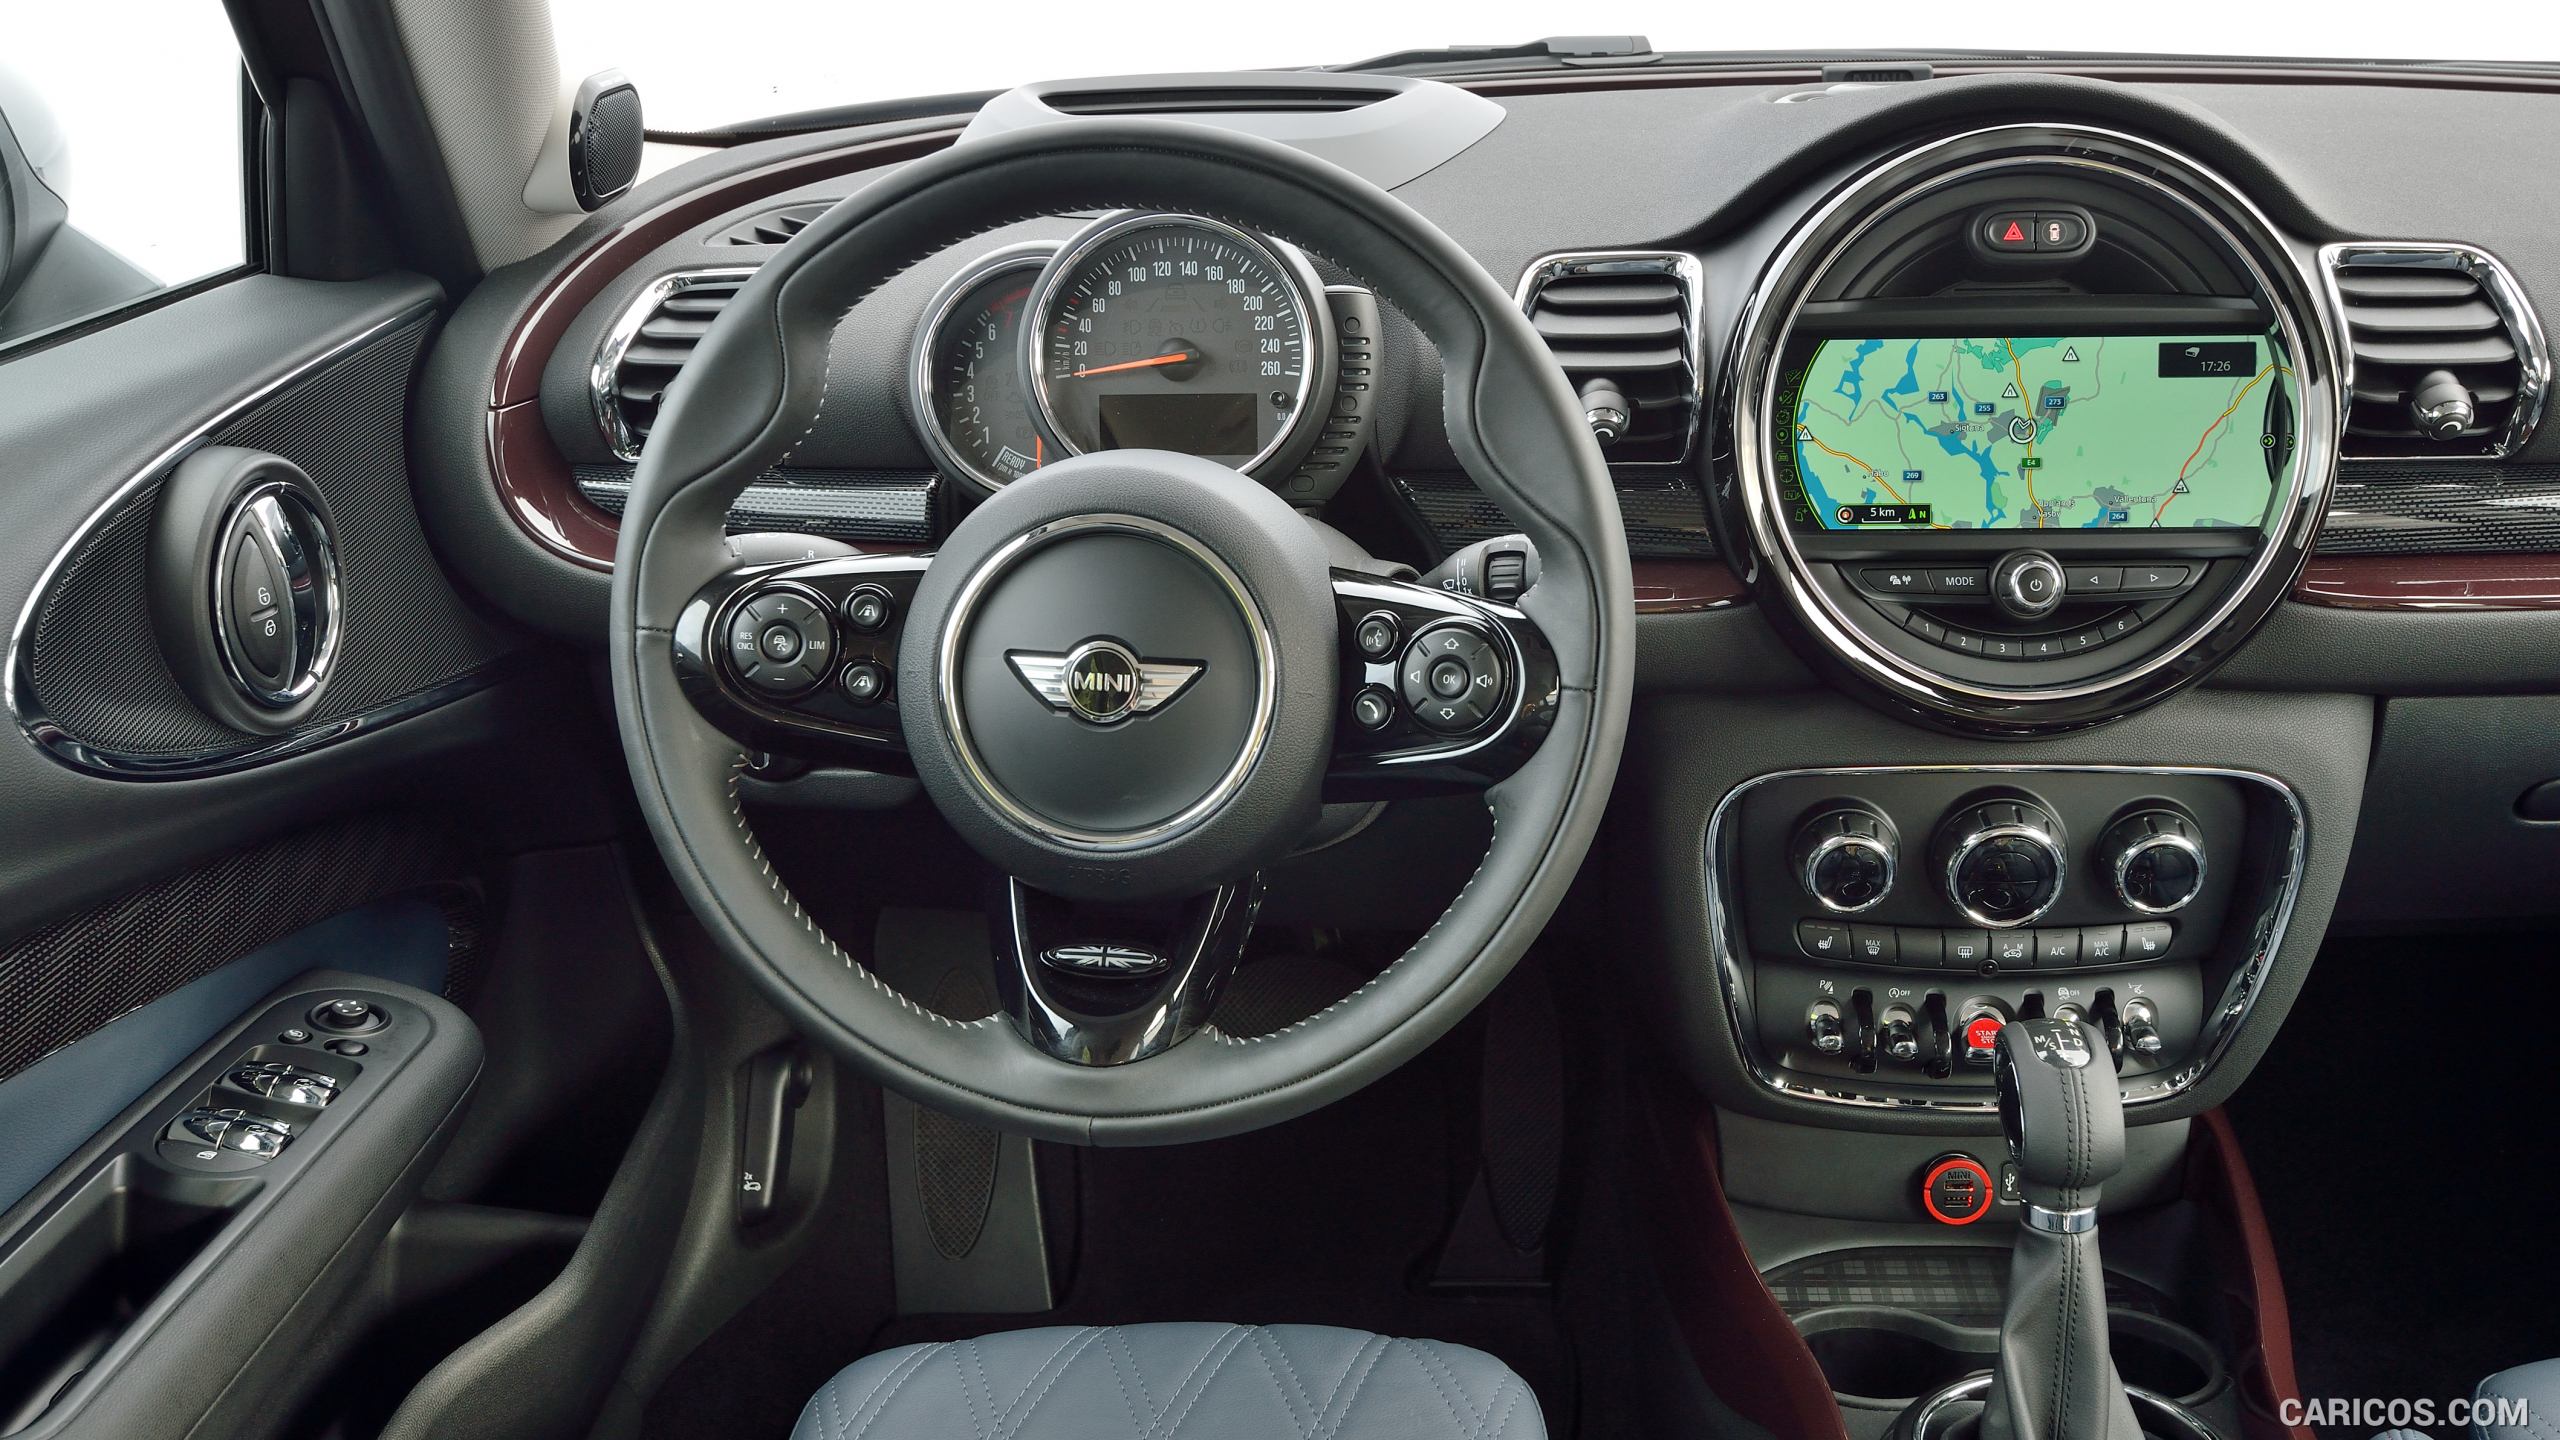 2016 MINI Cooper S Clubman in Metallic Pure Burgundy - Interior, Cockpit, #356 of 380